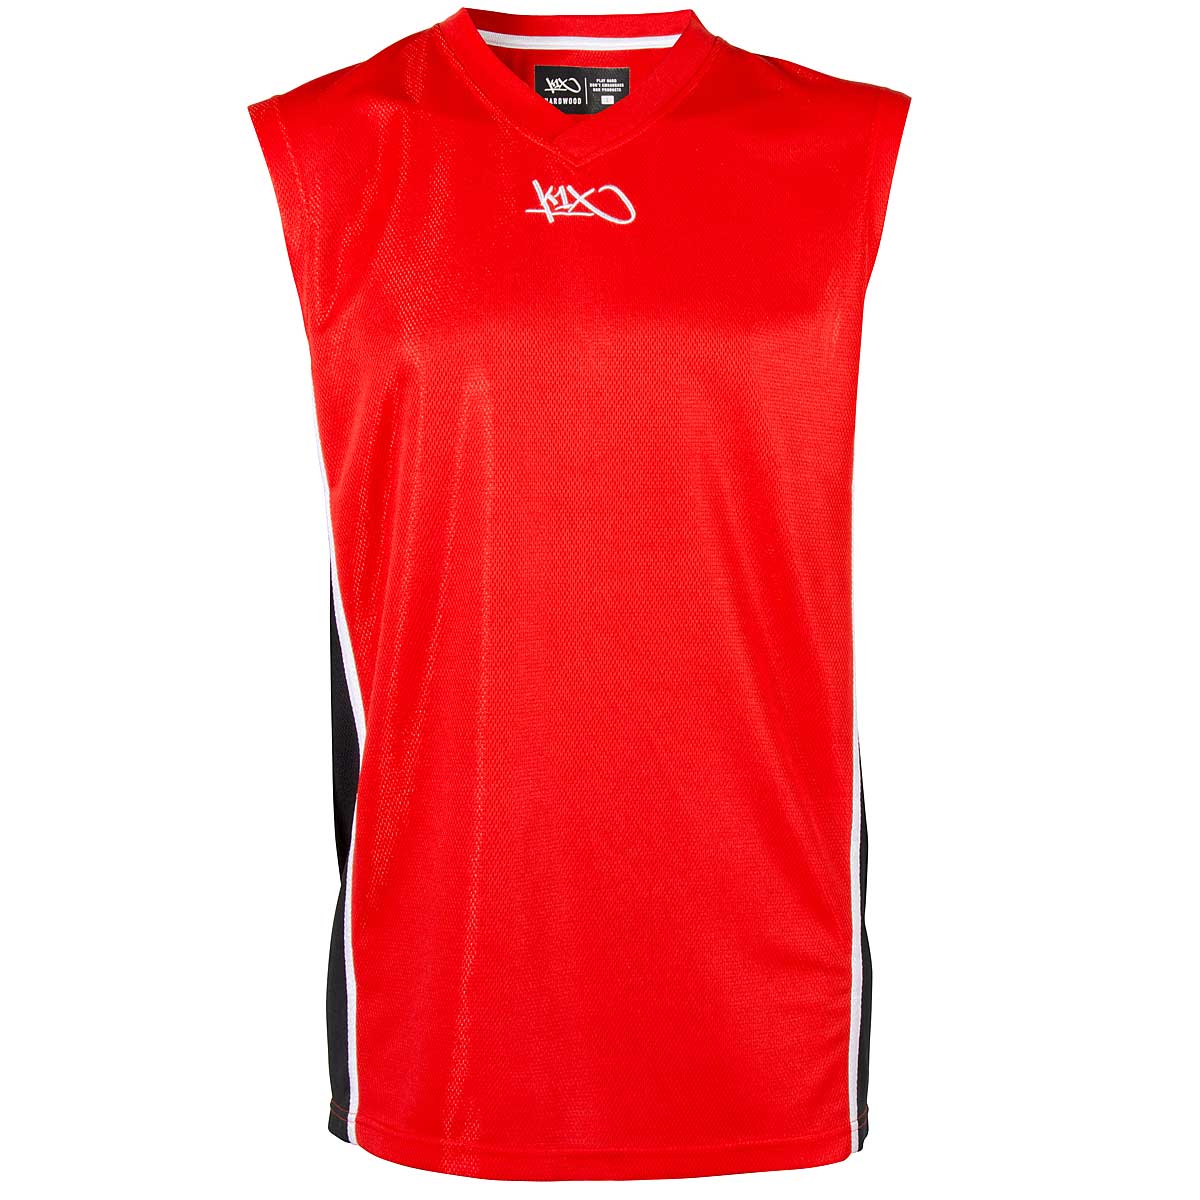 K1X K1X Hardwood League Uniform Jersey Mk2, Red/Black/White